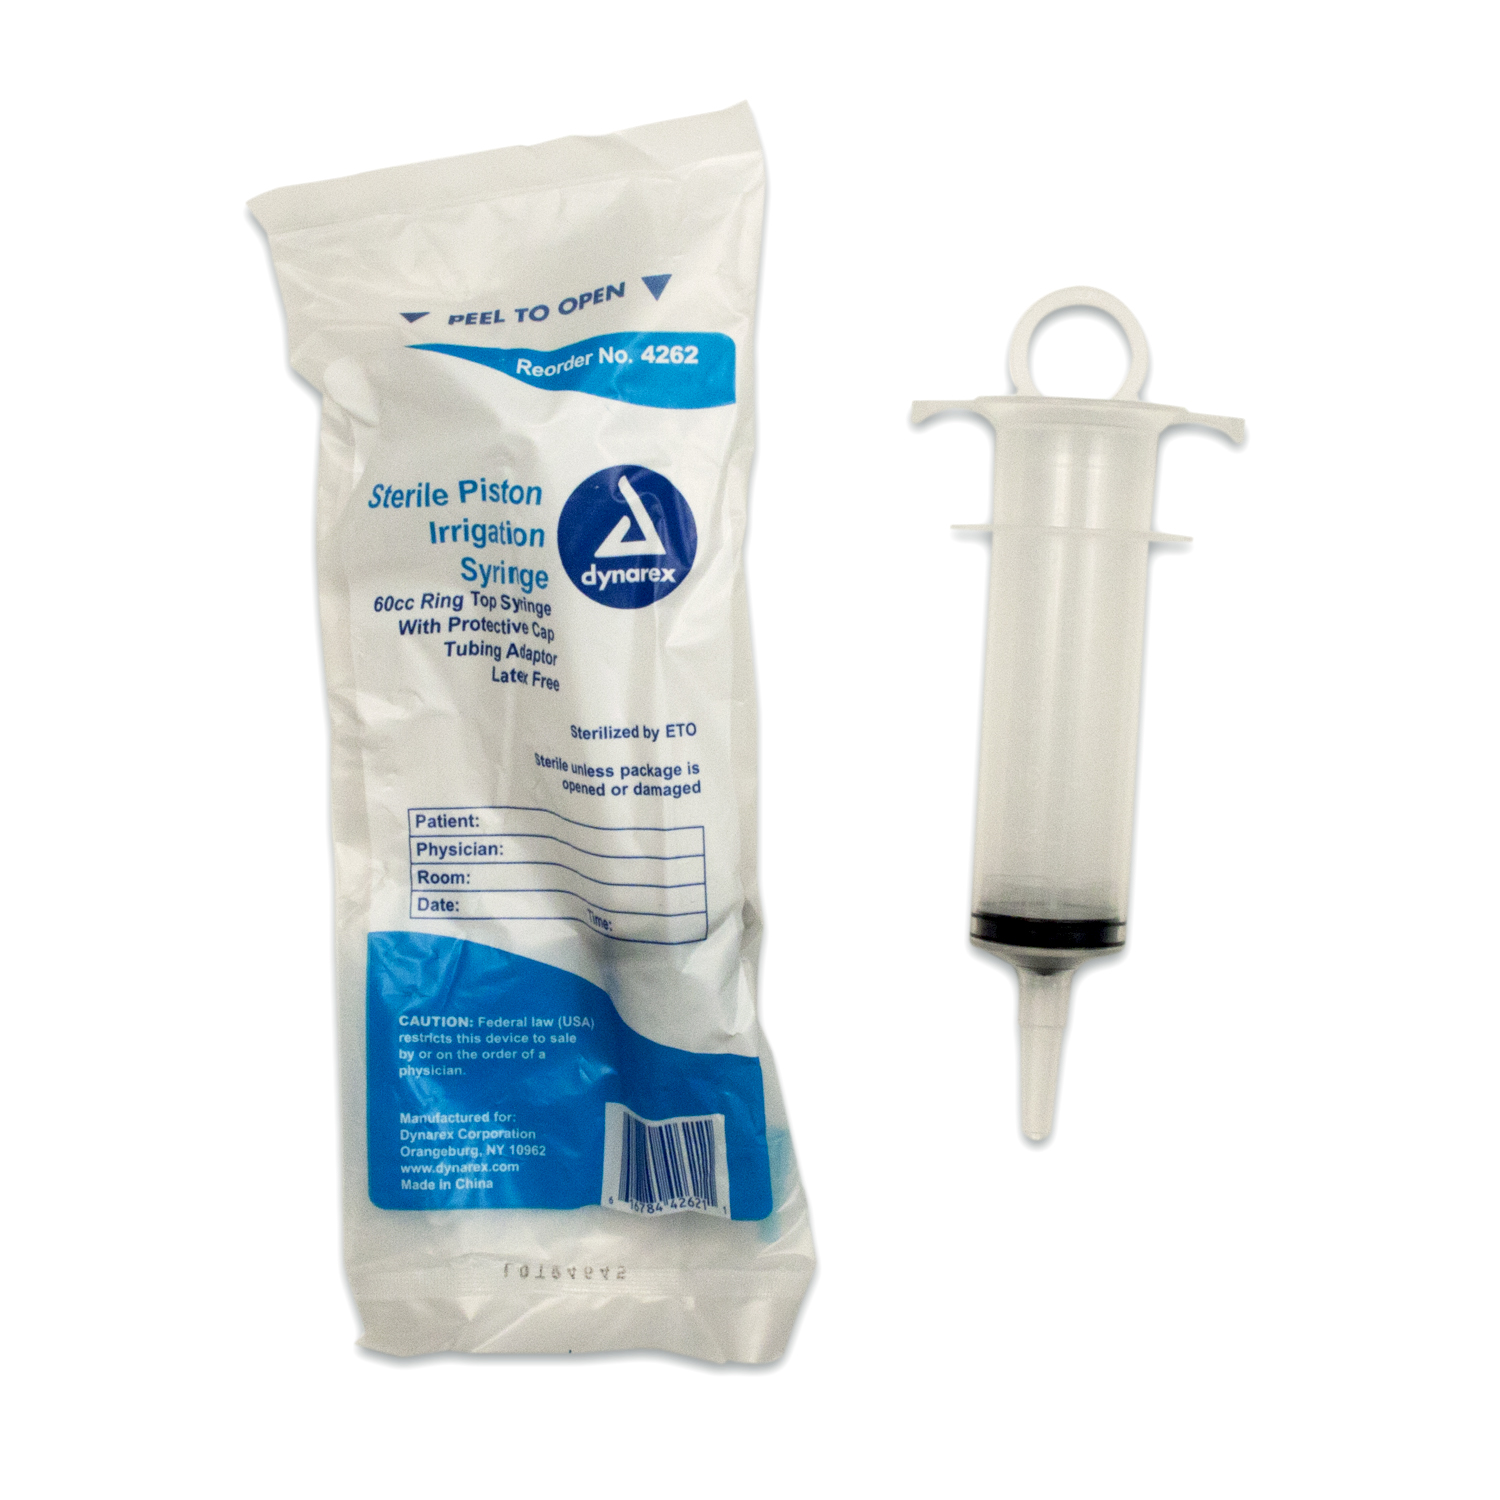 Sterile Piston Irrigation Syringe image